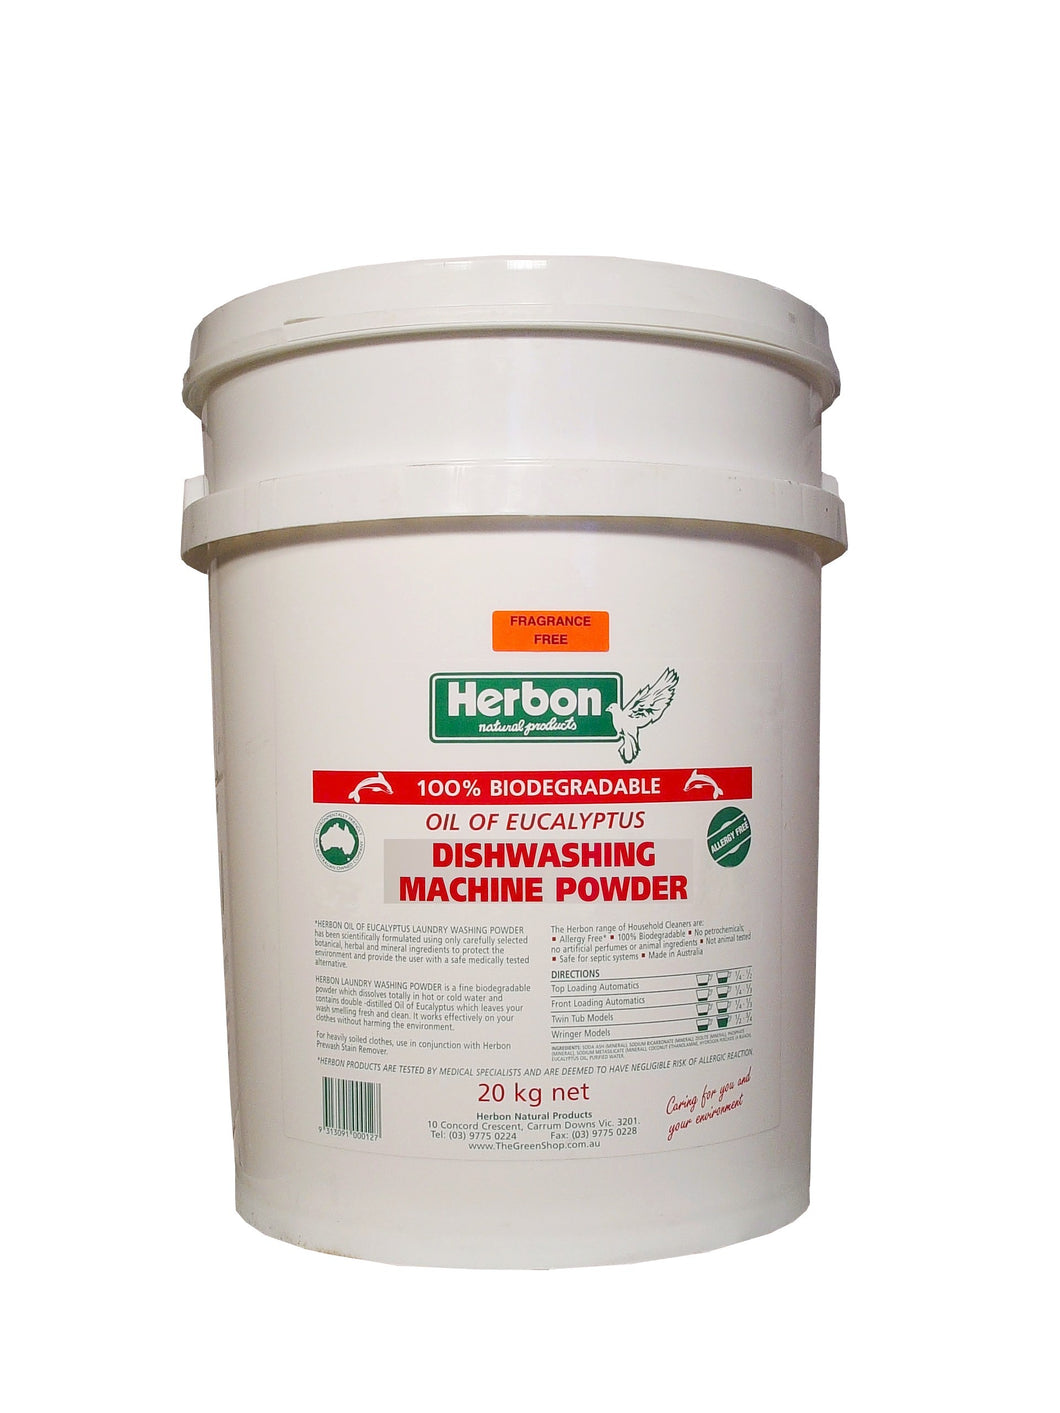 Herbon, Dishwashing Machine Powder, 100 % Biodegradable, Oil Of Eucalyptus, 20 Kg